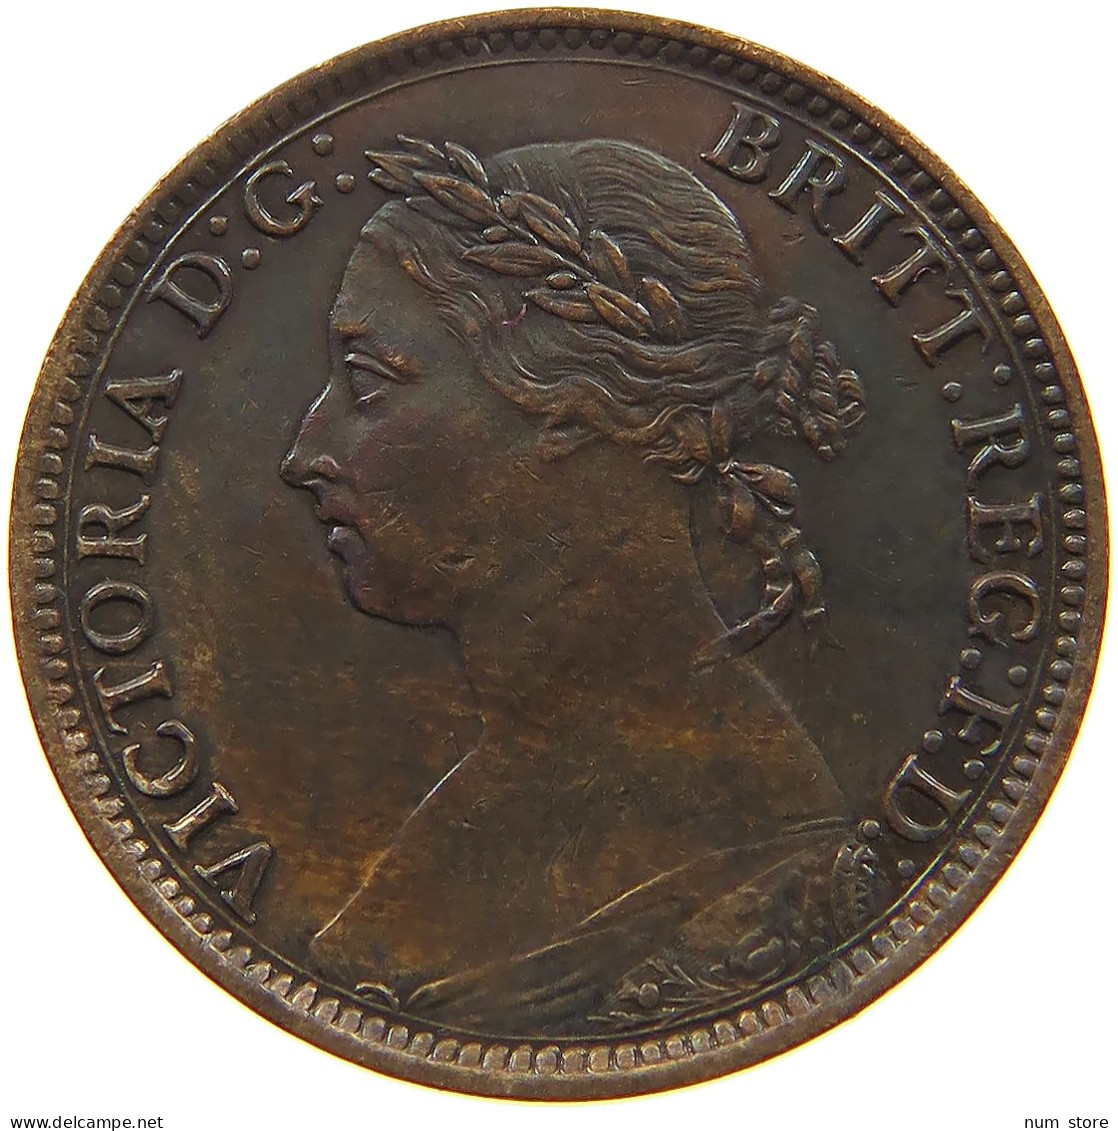 GREAT BRITAIN FARTHING 1885 Victoria 1837-1901 #s080 0197 - B. 1 Farthing